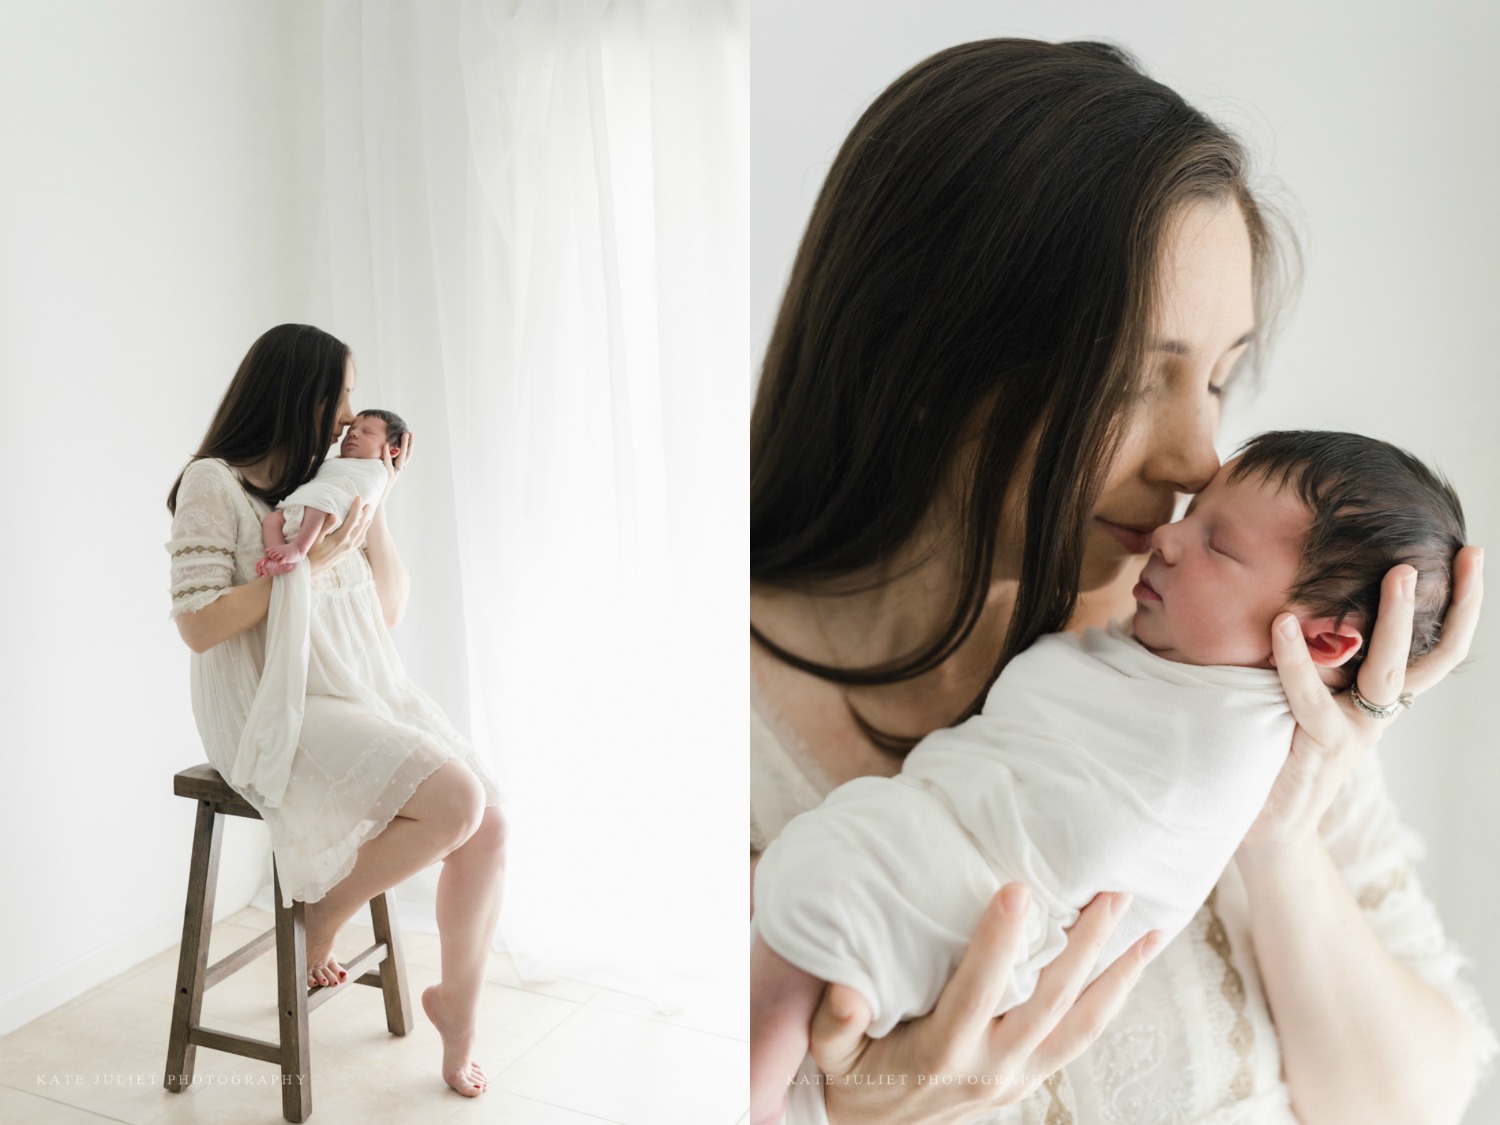 Washington DC Newborn Photographer | Kate Juliet Photography